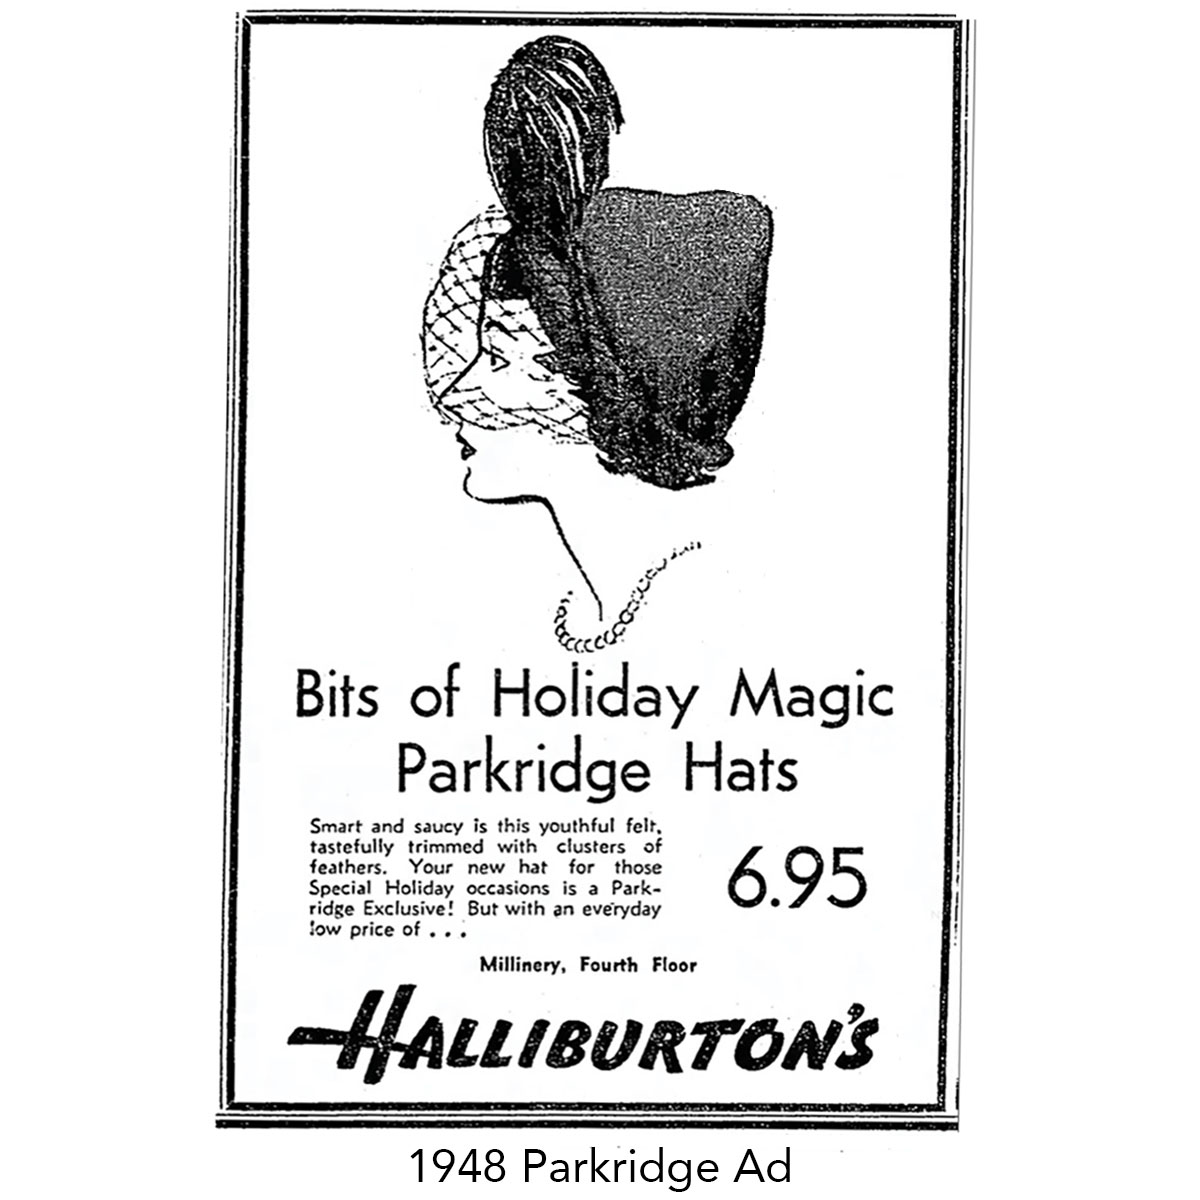 Parkridge hats advertisement from 1948